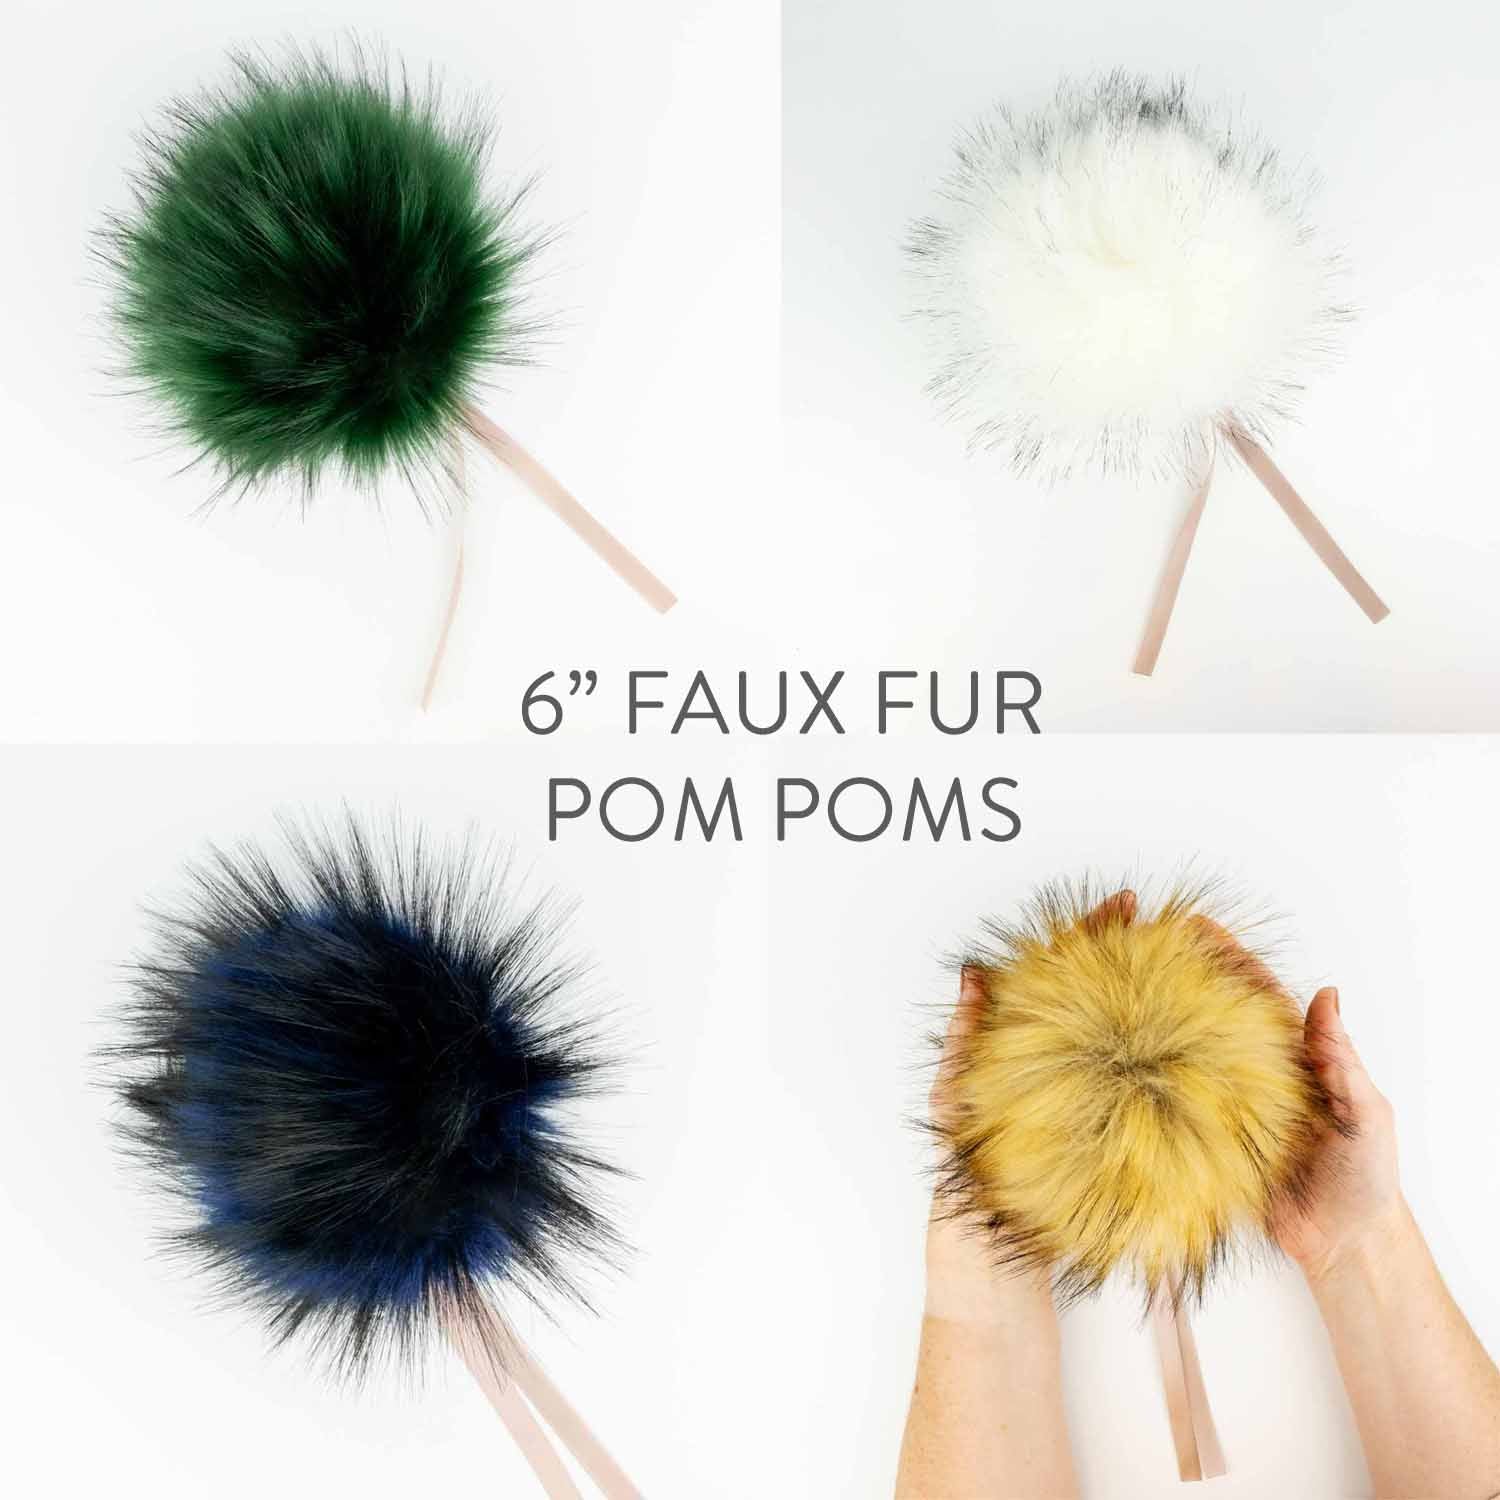 Fabulous Faux Fur Pom Poms at Fabulous Yarn